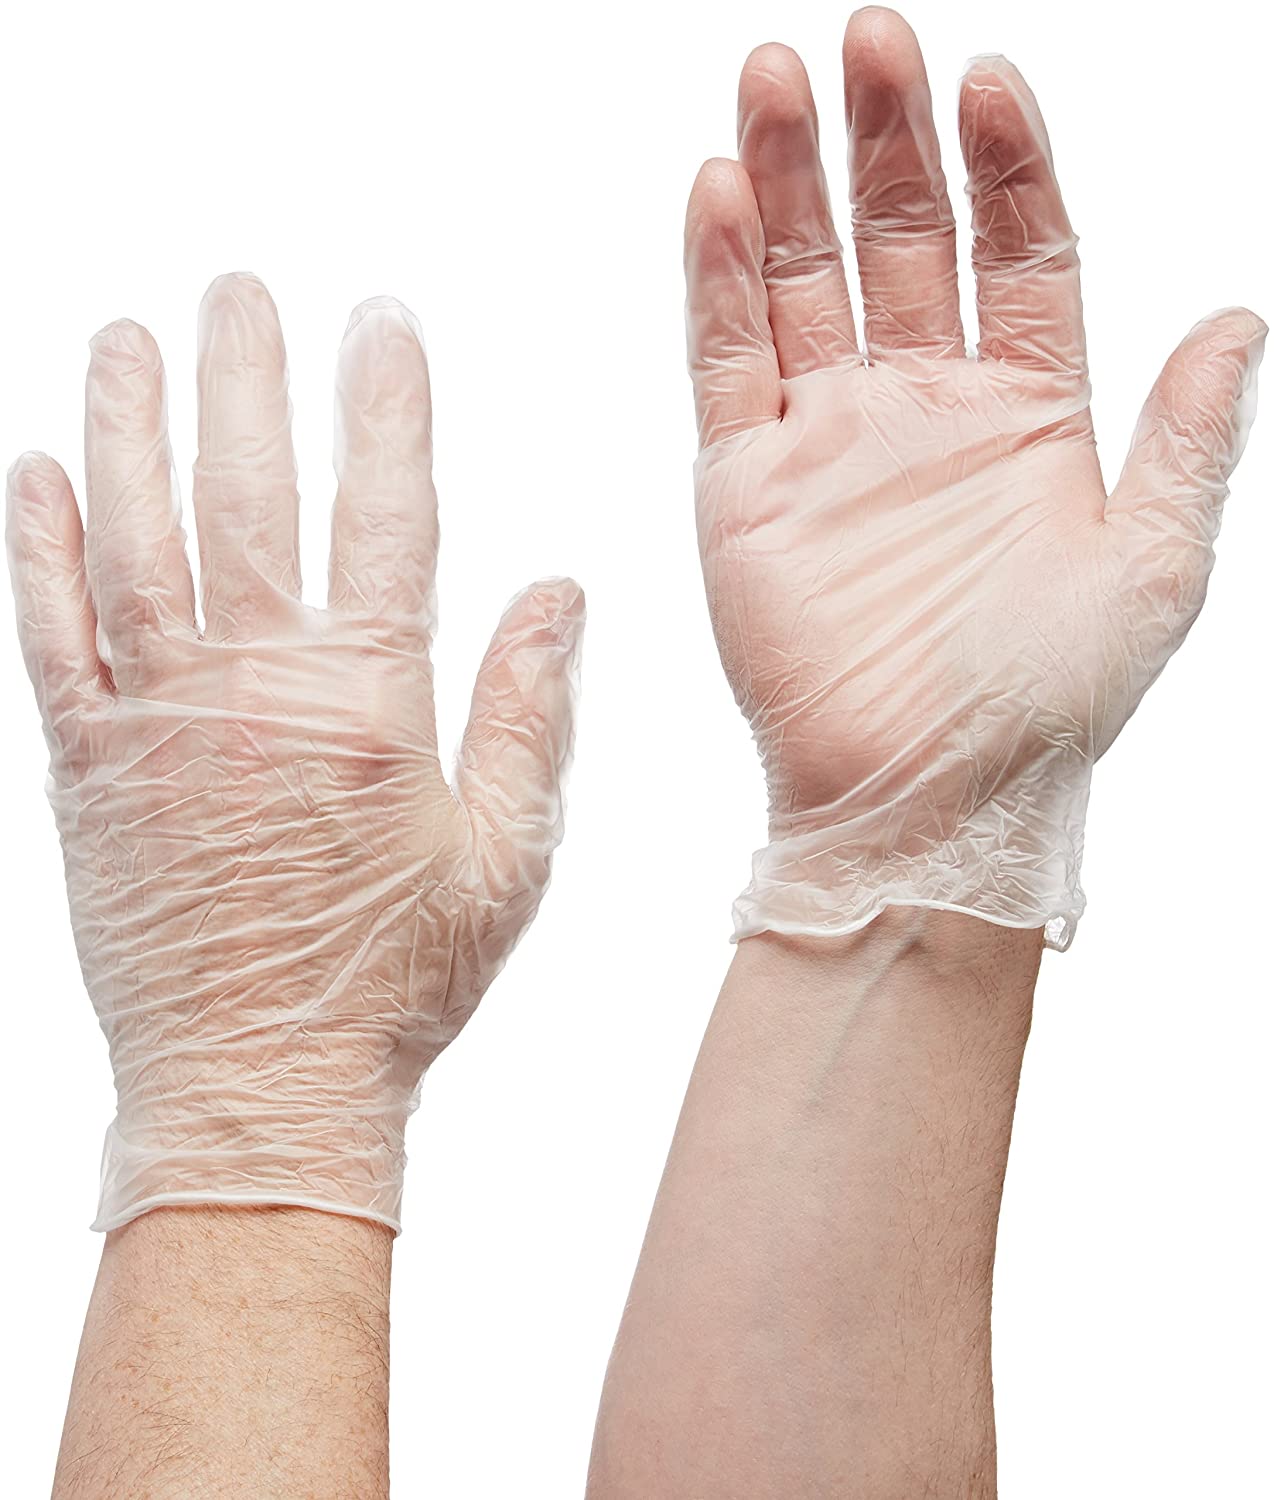 Clear vinyl powder free gloves - medium - 1 x 100